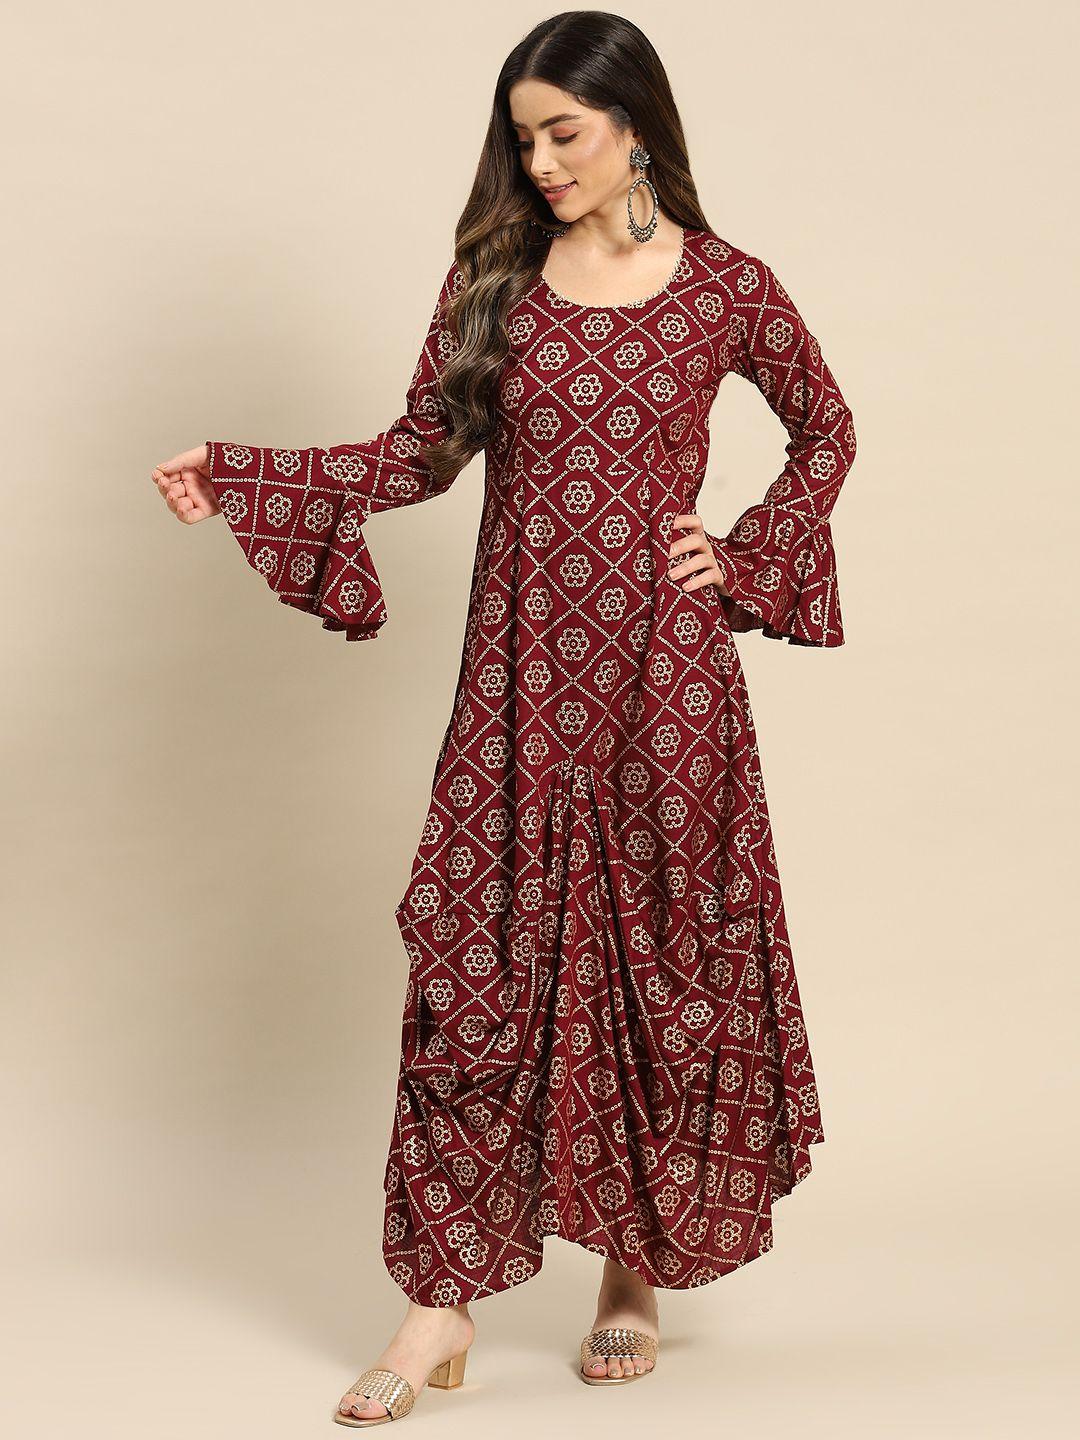 mabish by sonal jain maroon ethnic motifs maxi dress